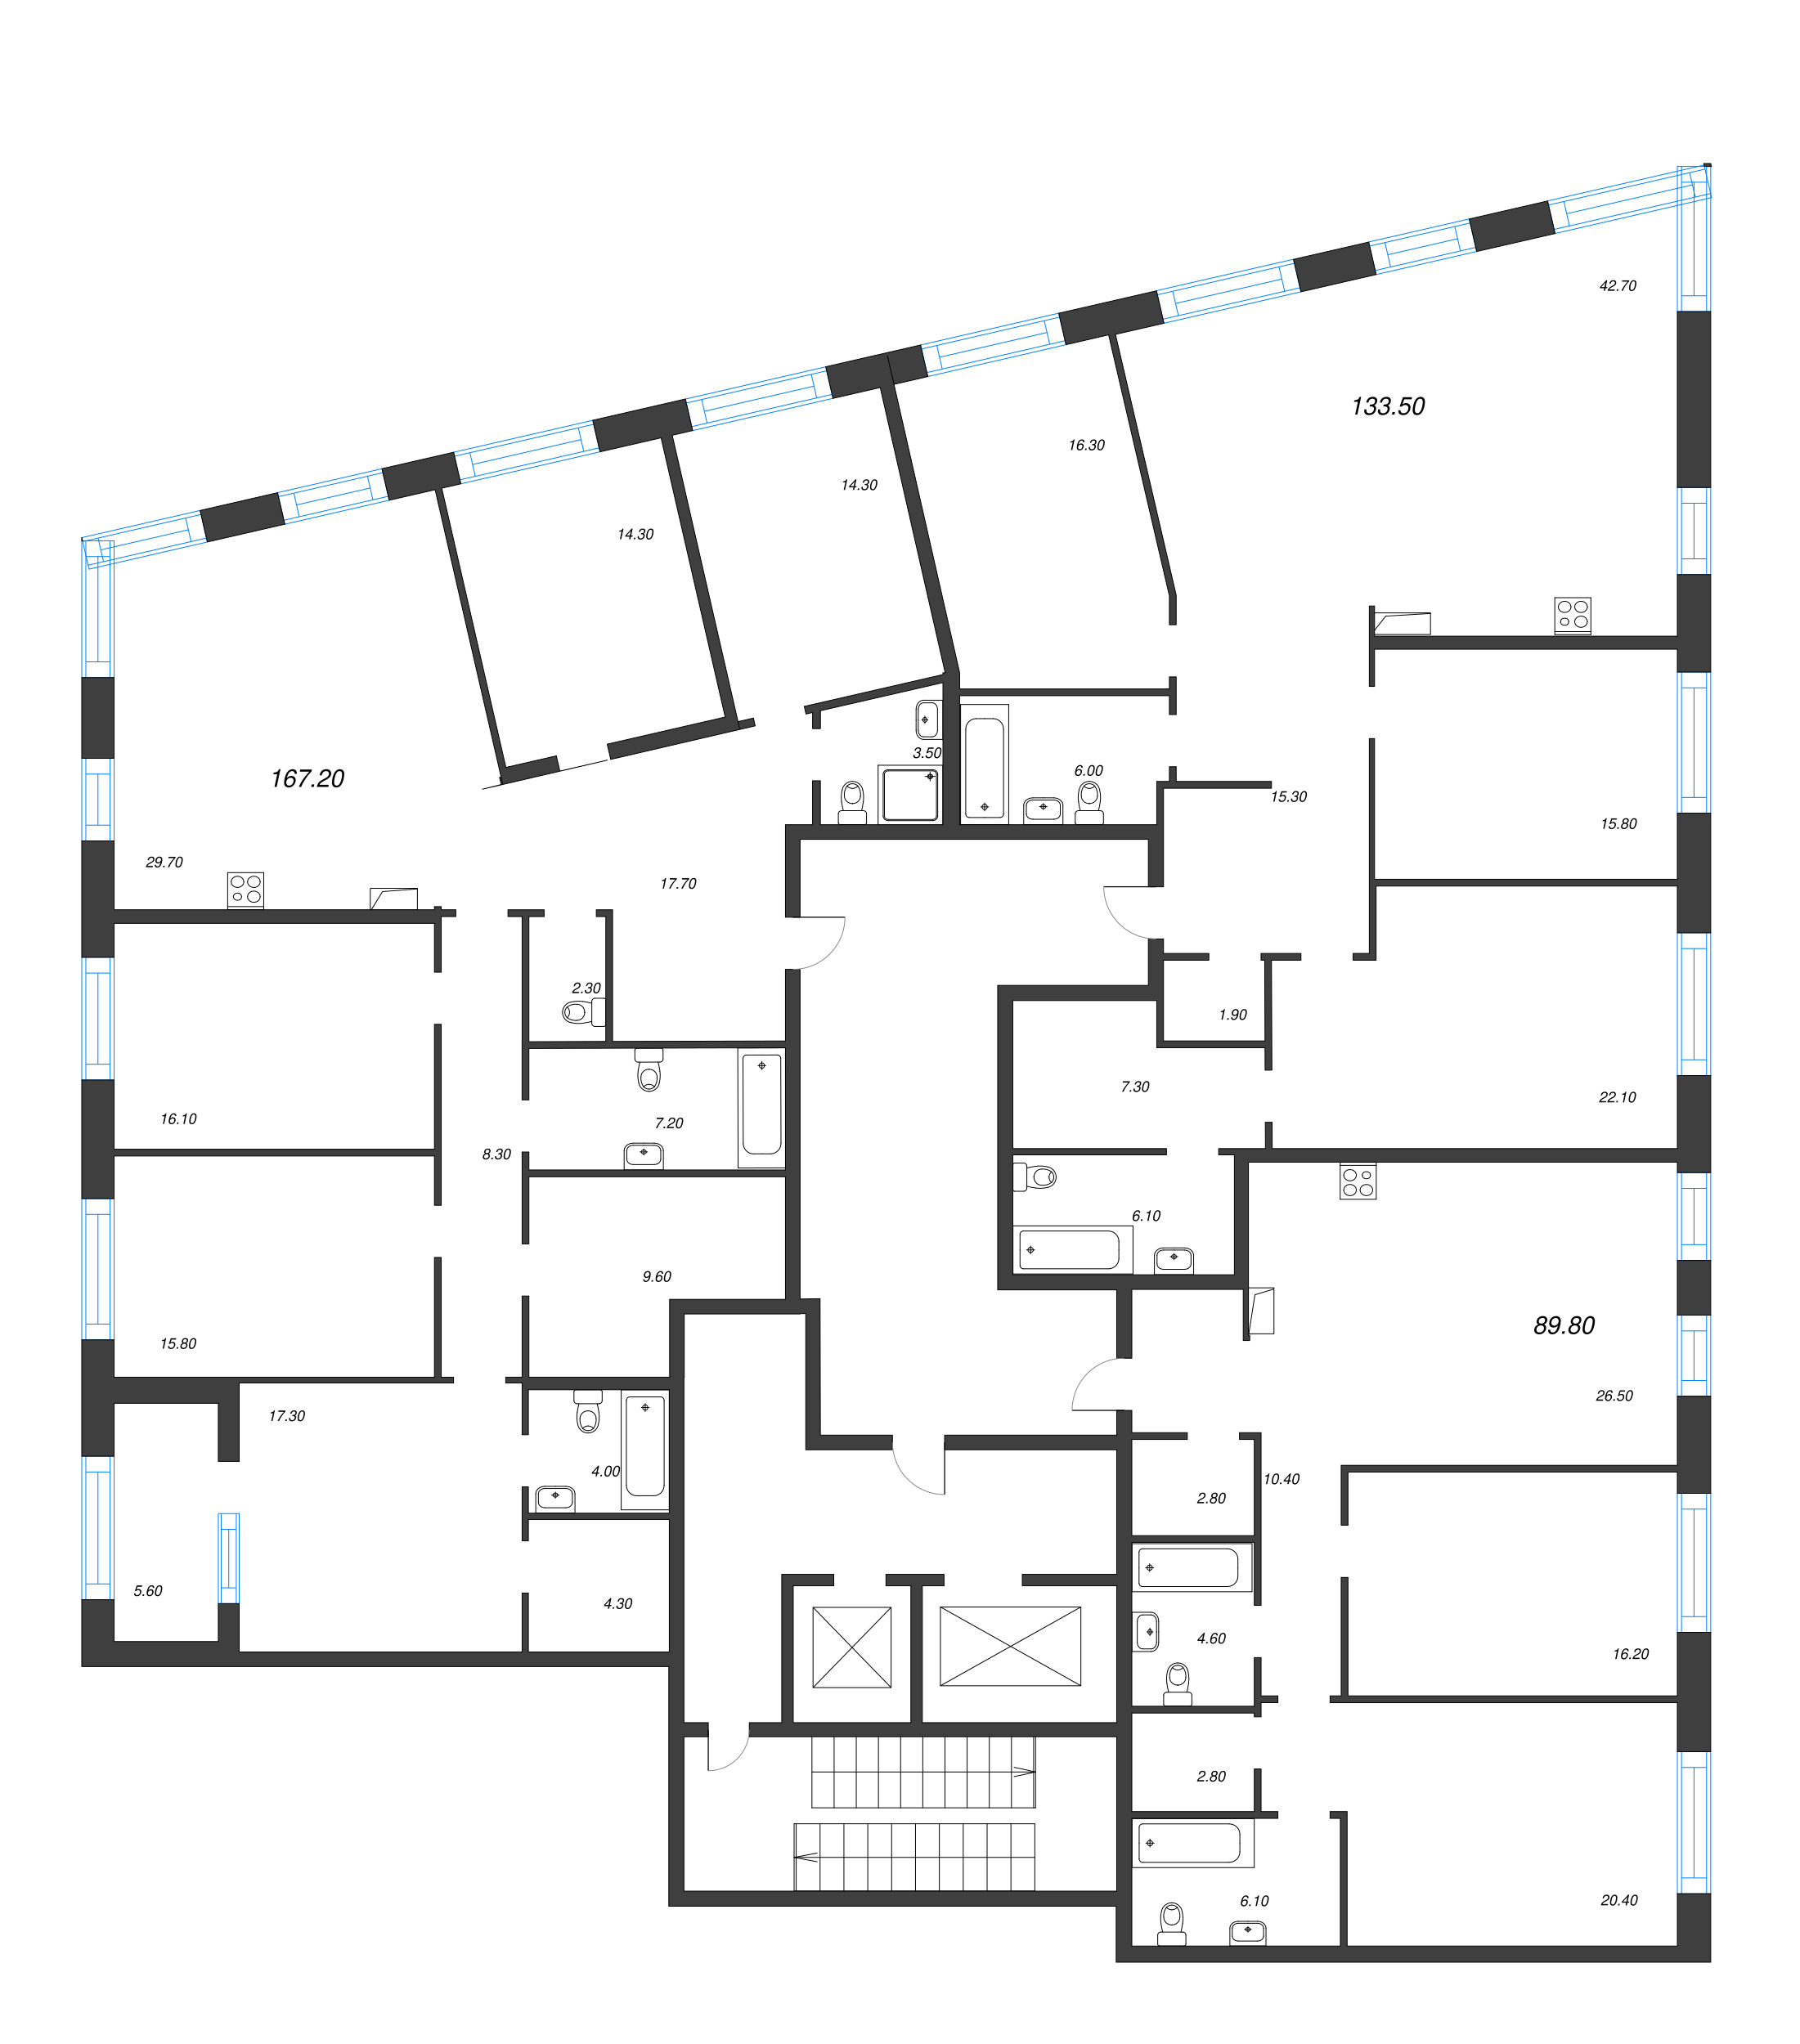 4-комнатная (Евро) квартира, 133.5 м² в ЖК "ЛДМ" - планировка этажа